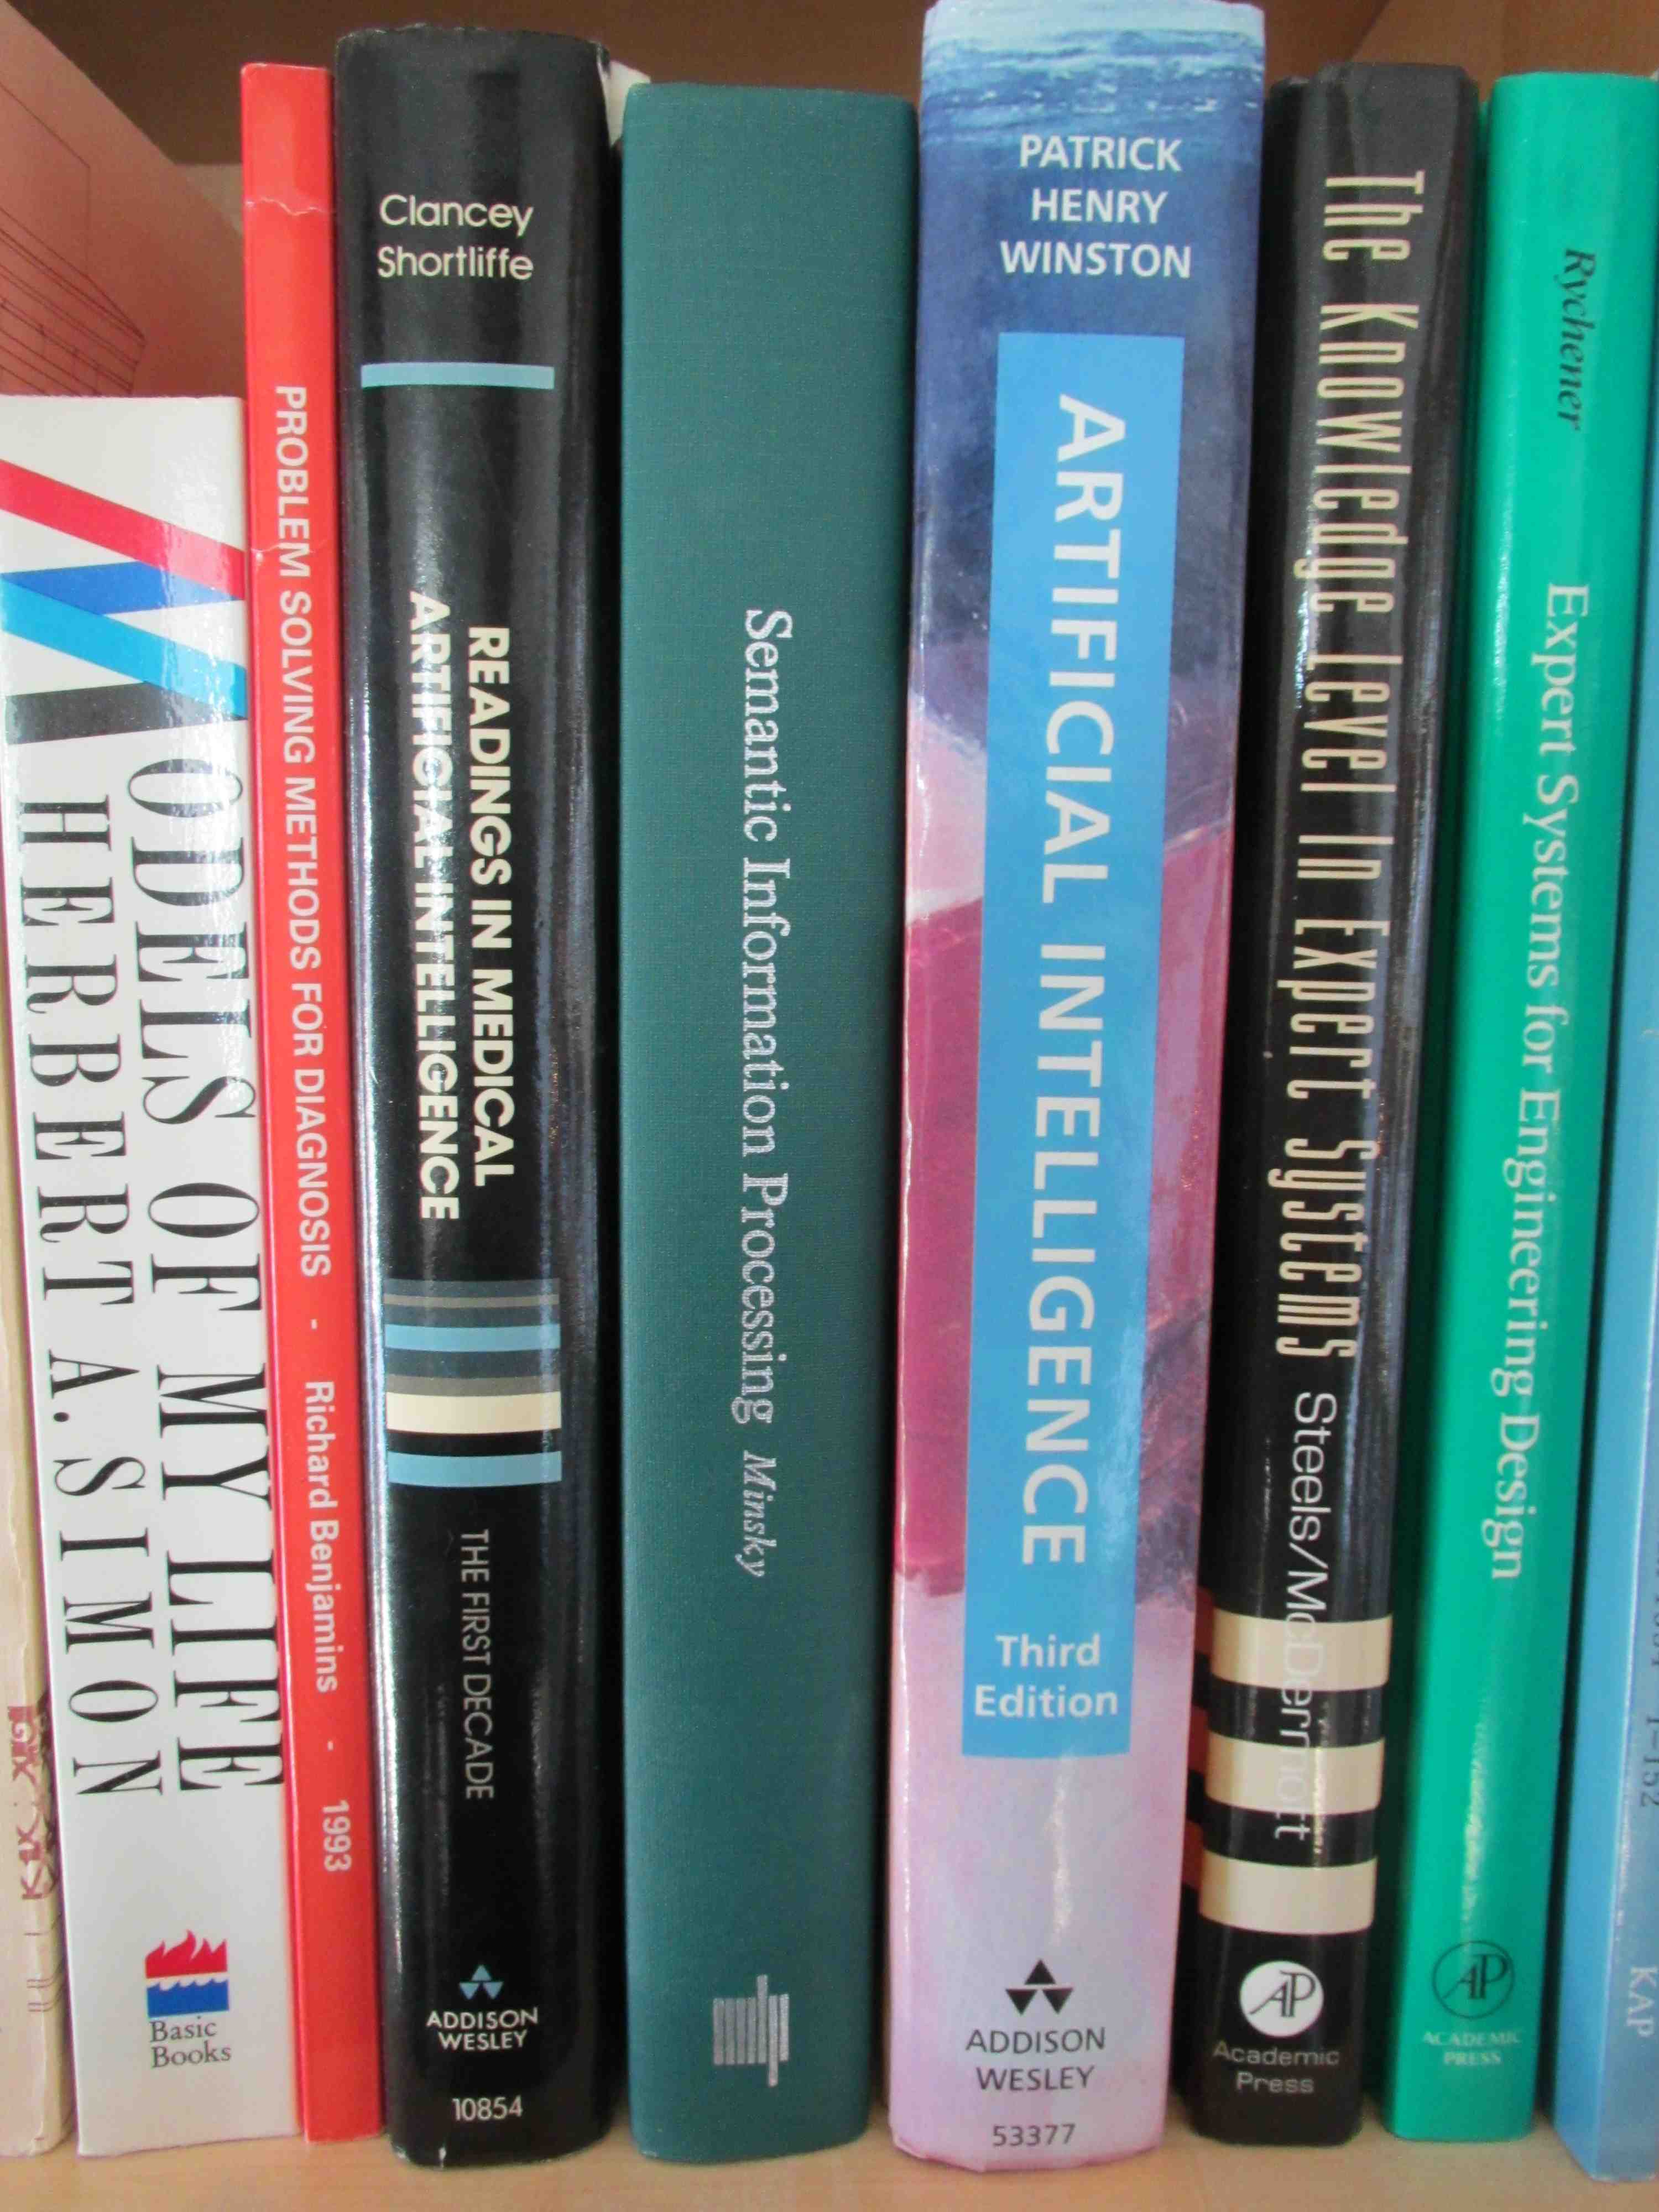 Semantic Information Processing on my bookshelf